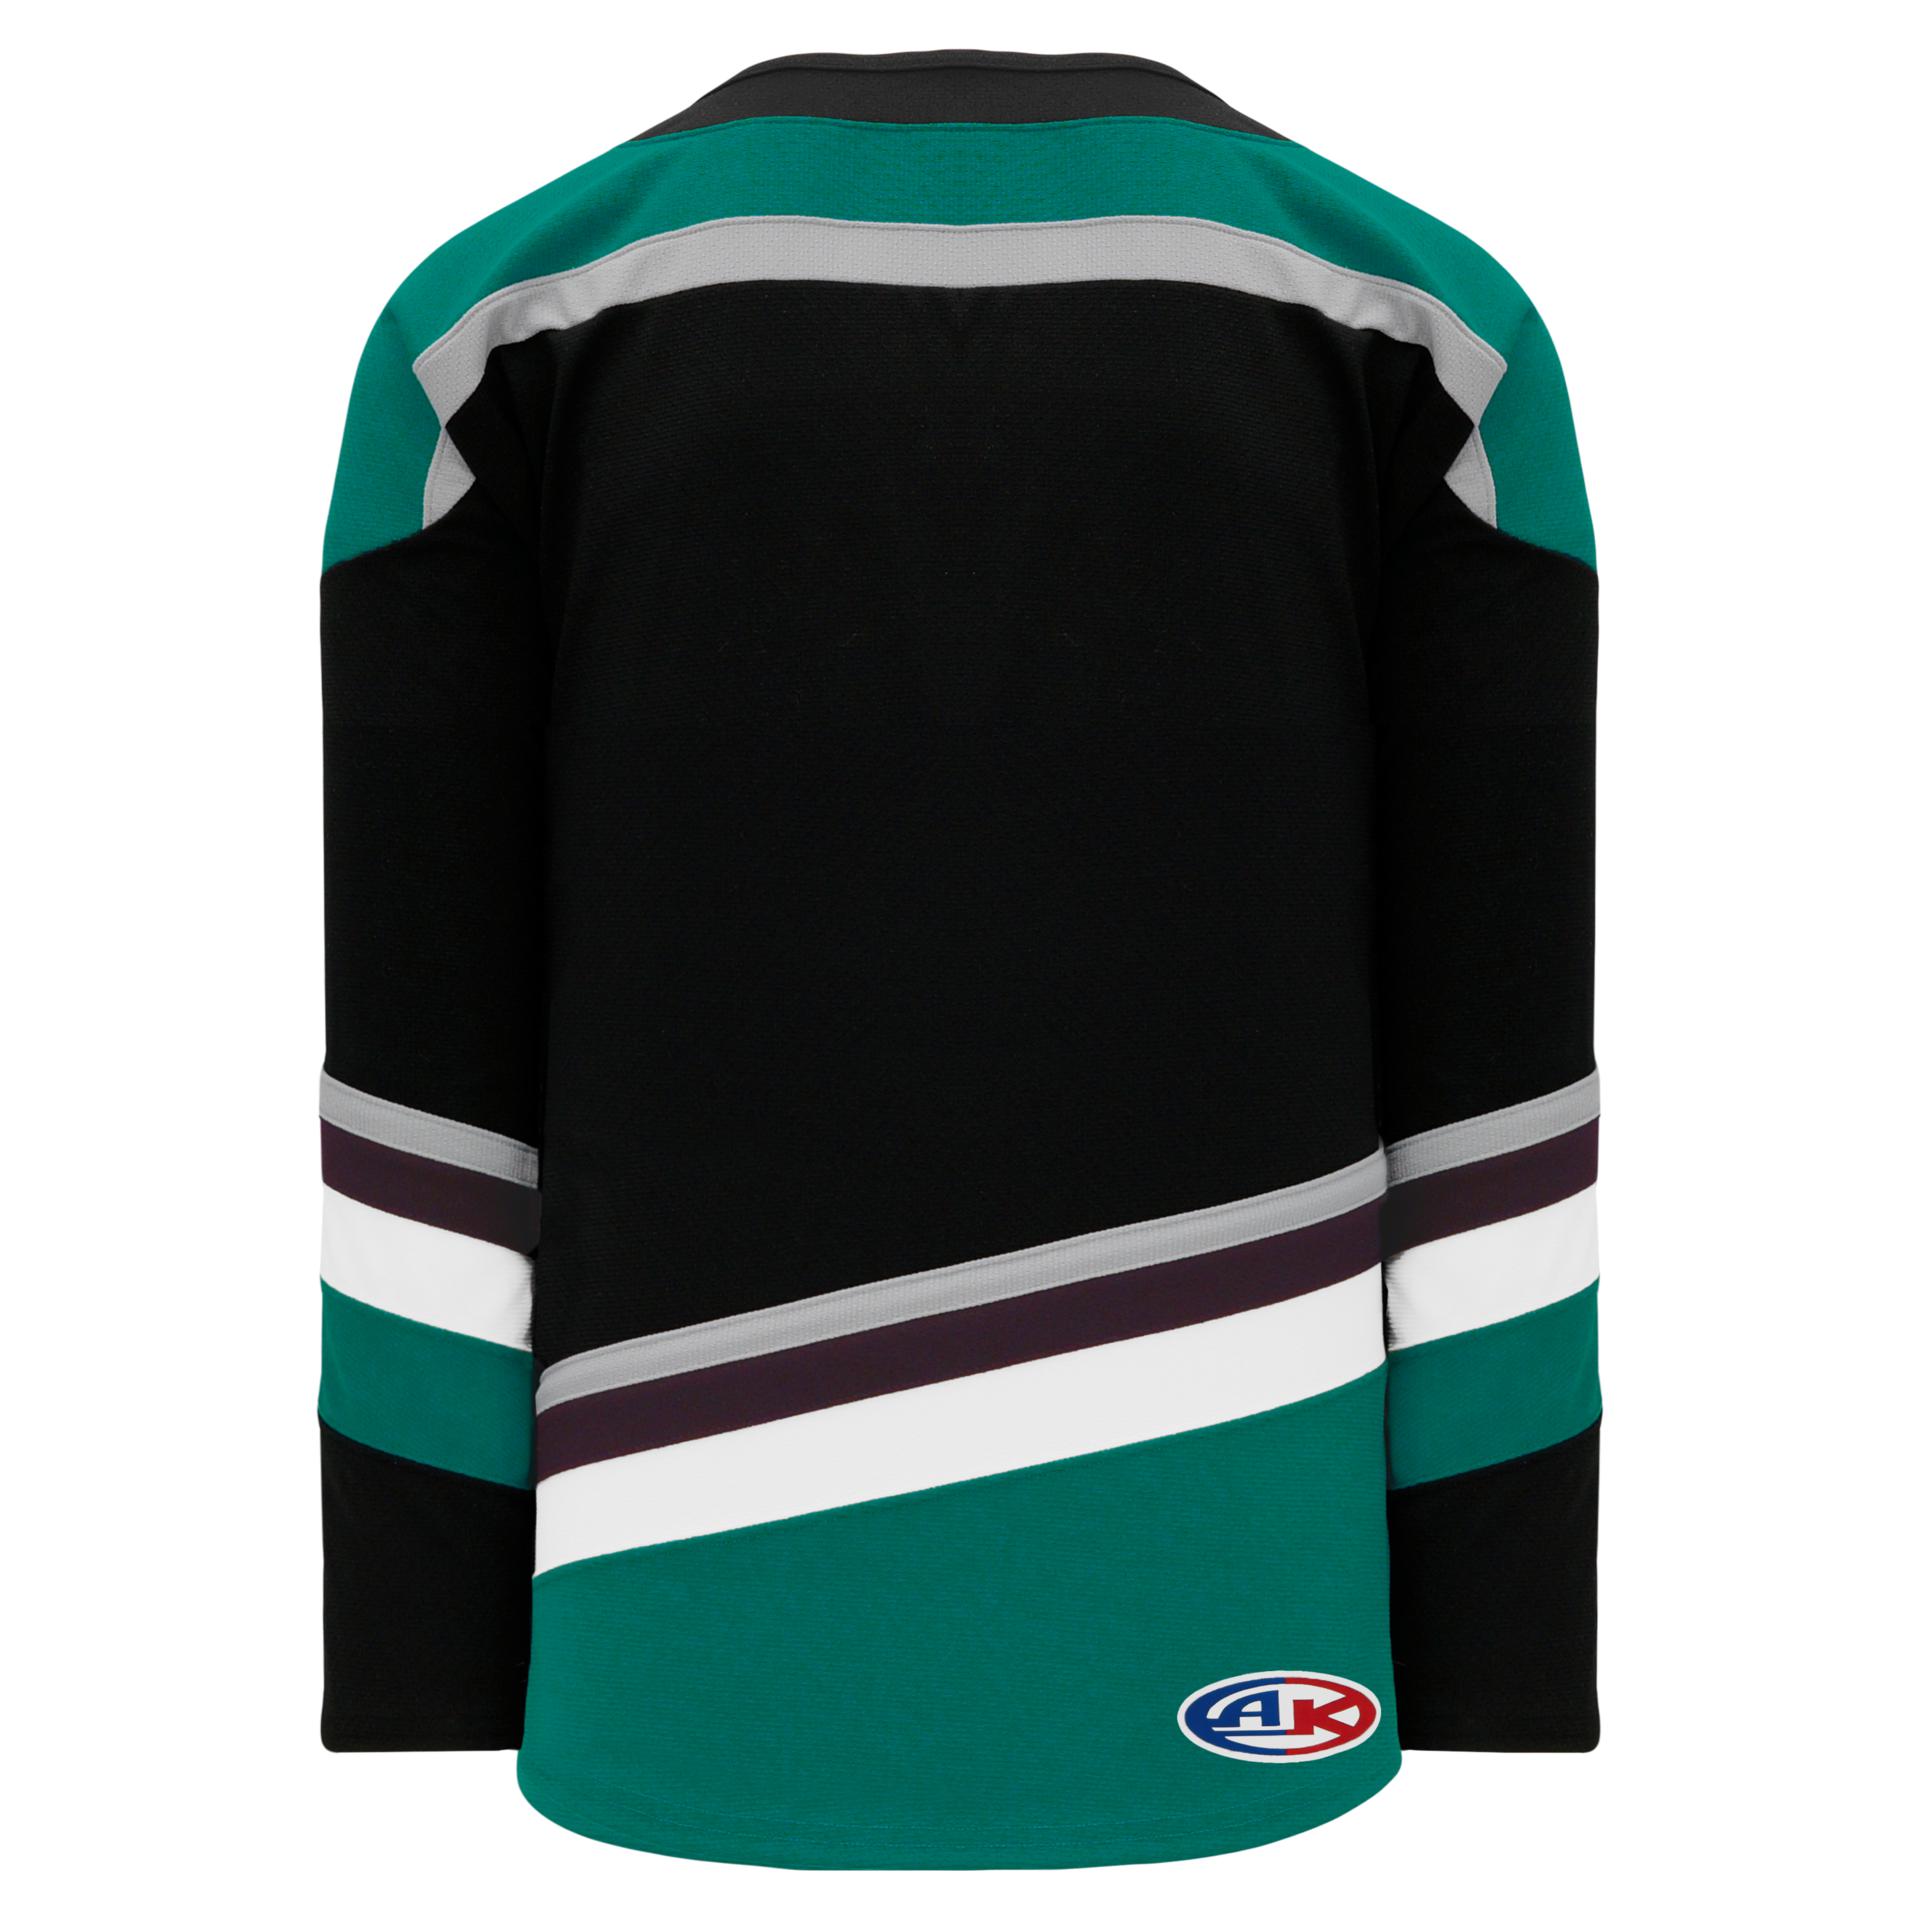 Hockey Jerseyz on X: Here is the Anaheim Ducks new jersey for